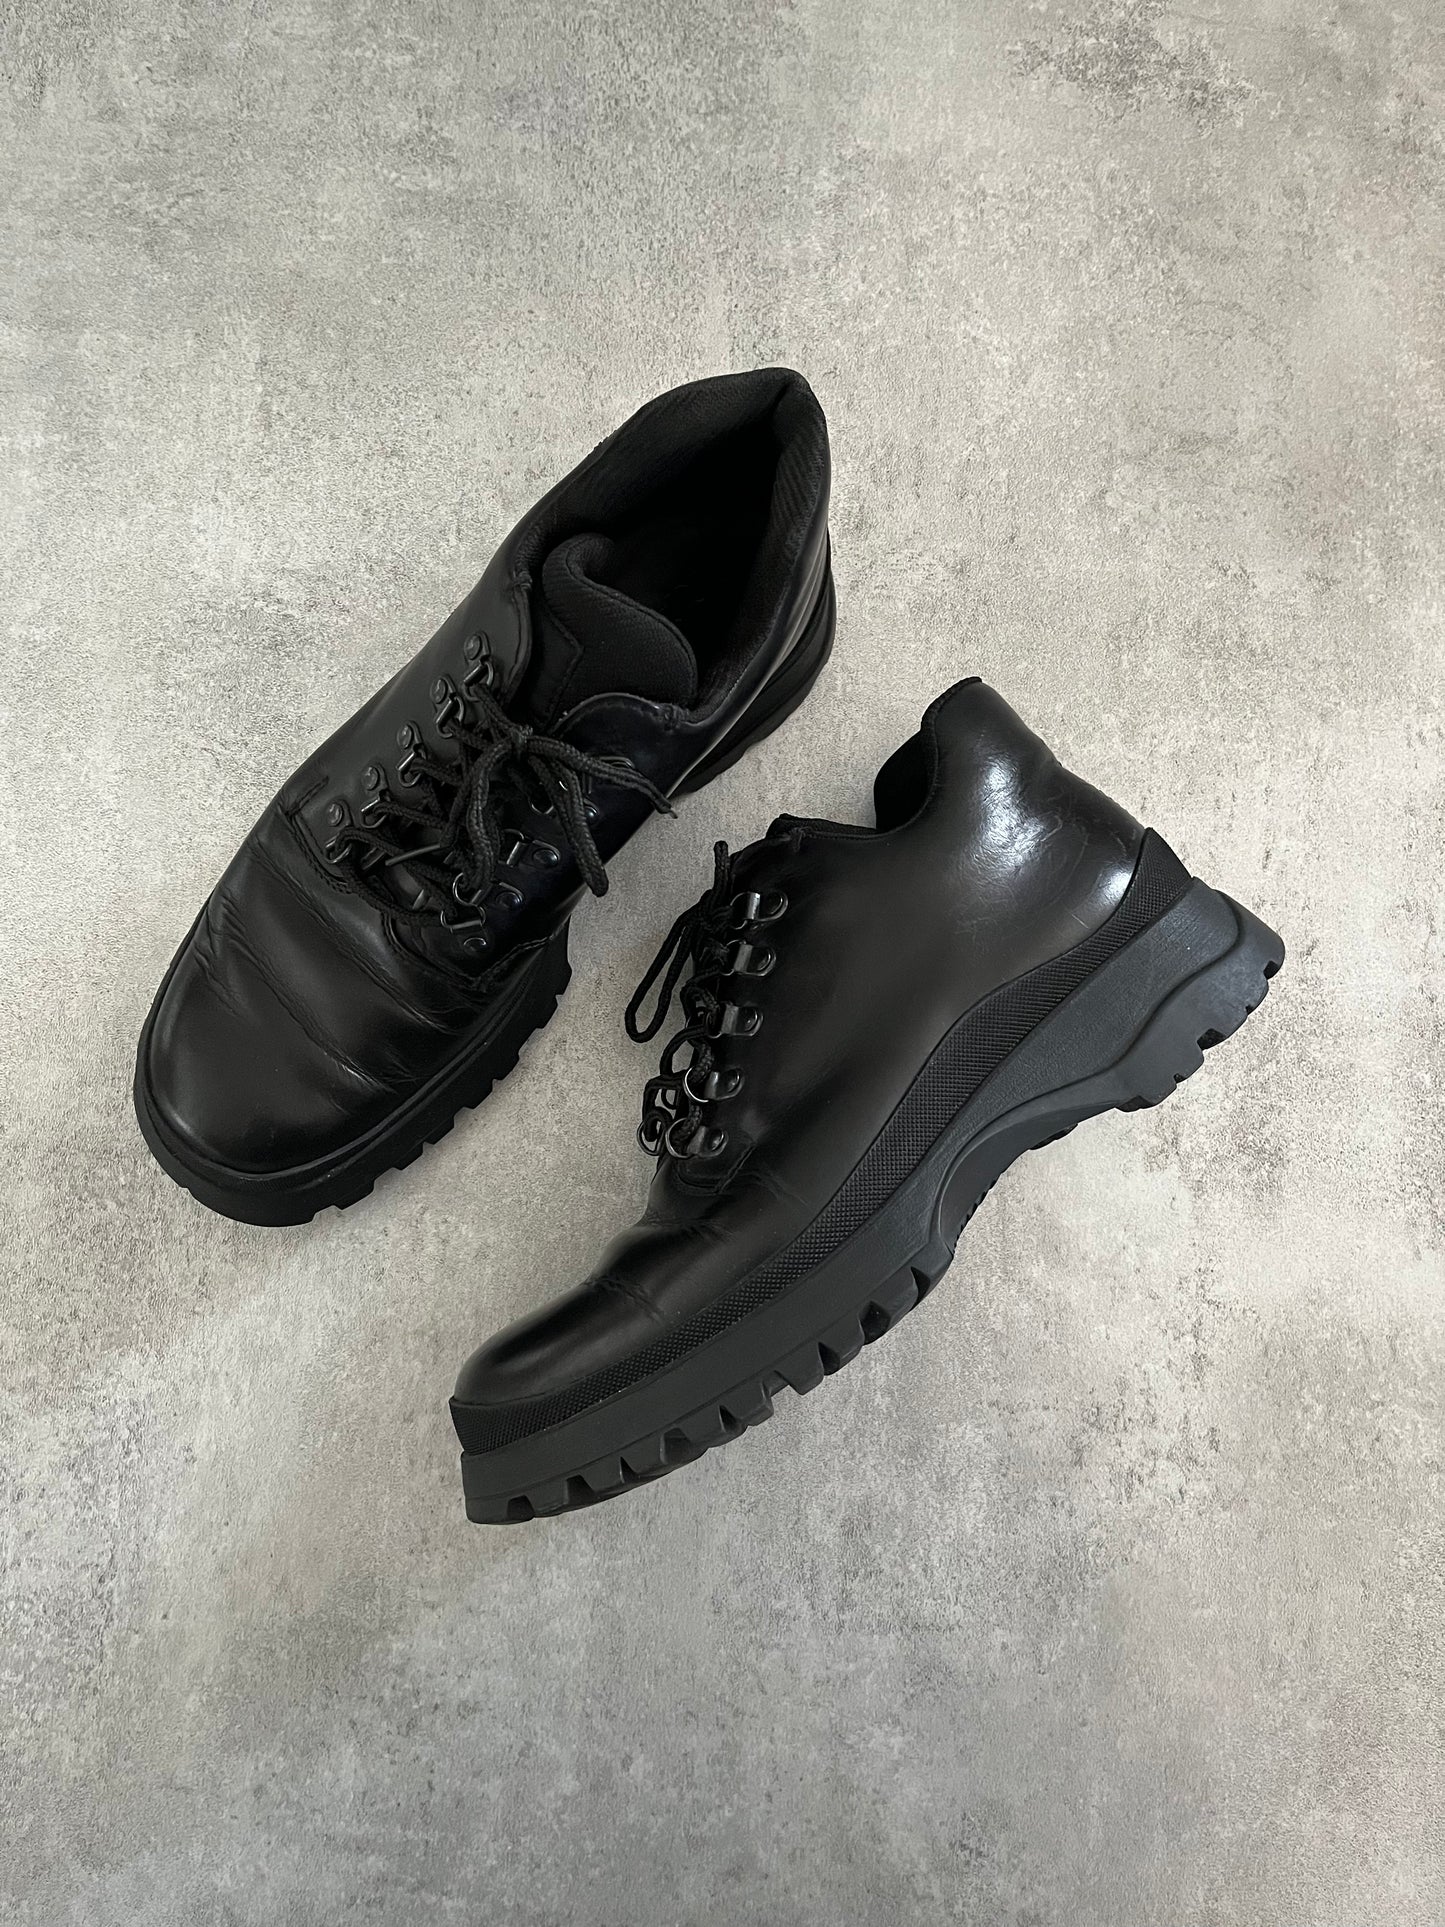 AW1999 Prada Vibram Leather Boots (41) - 3